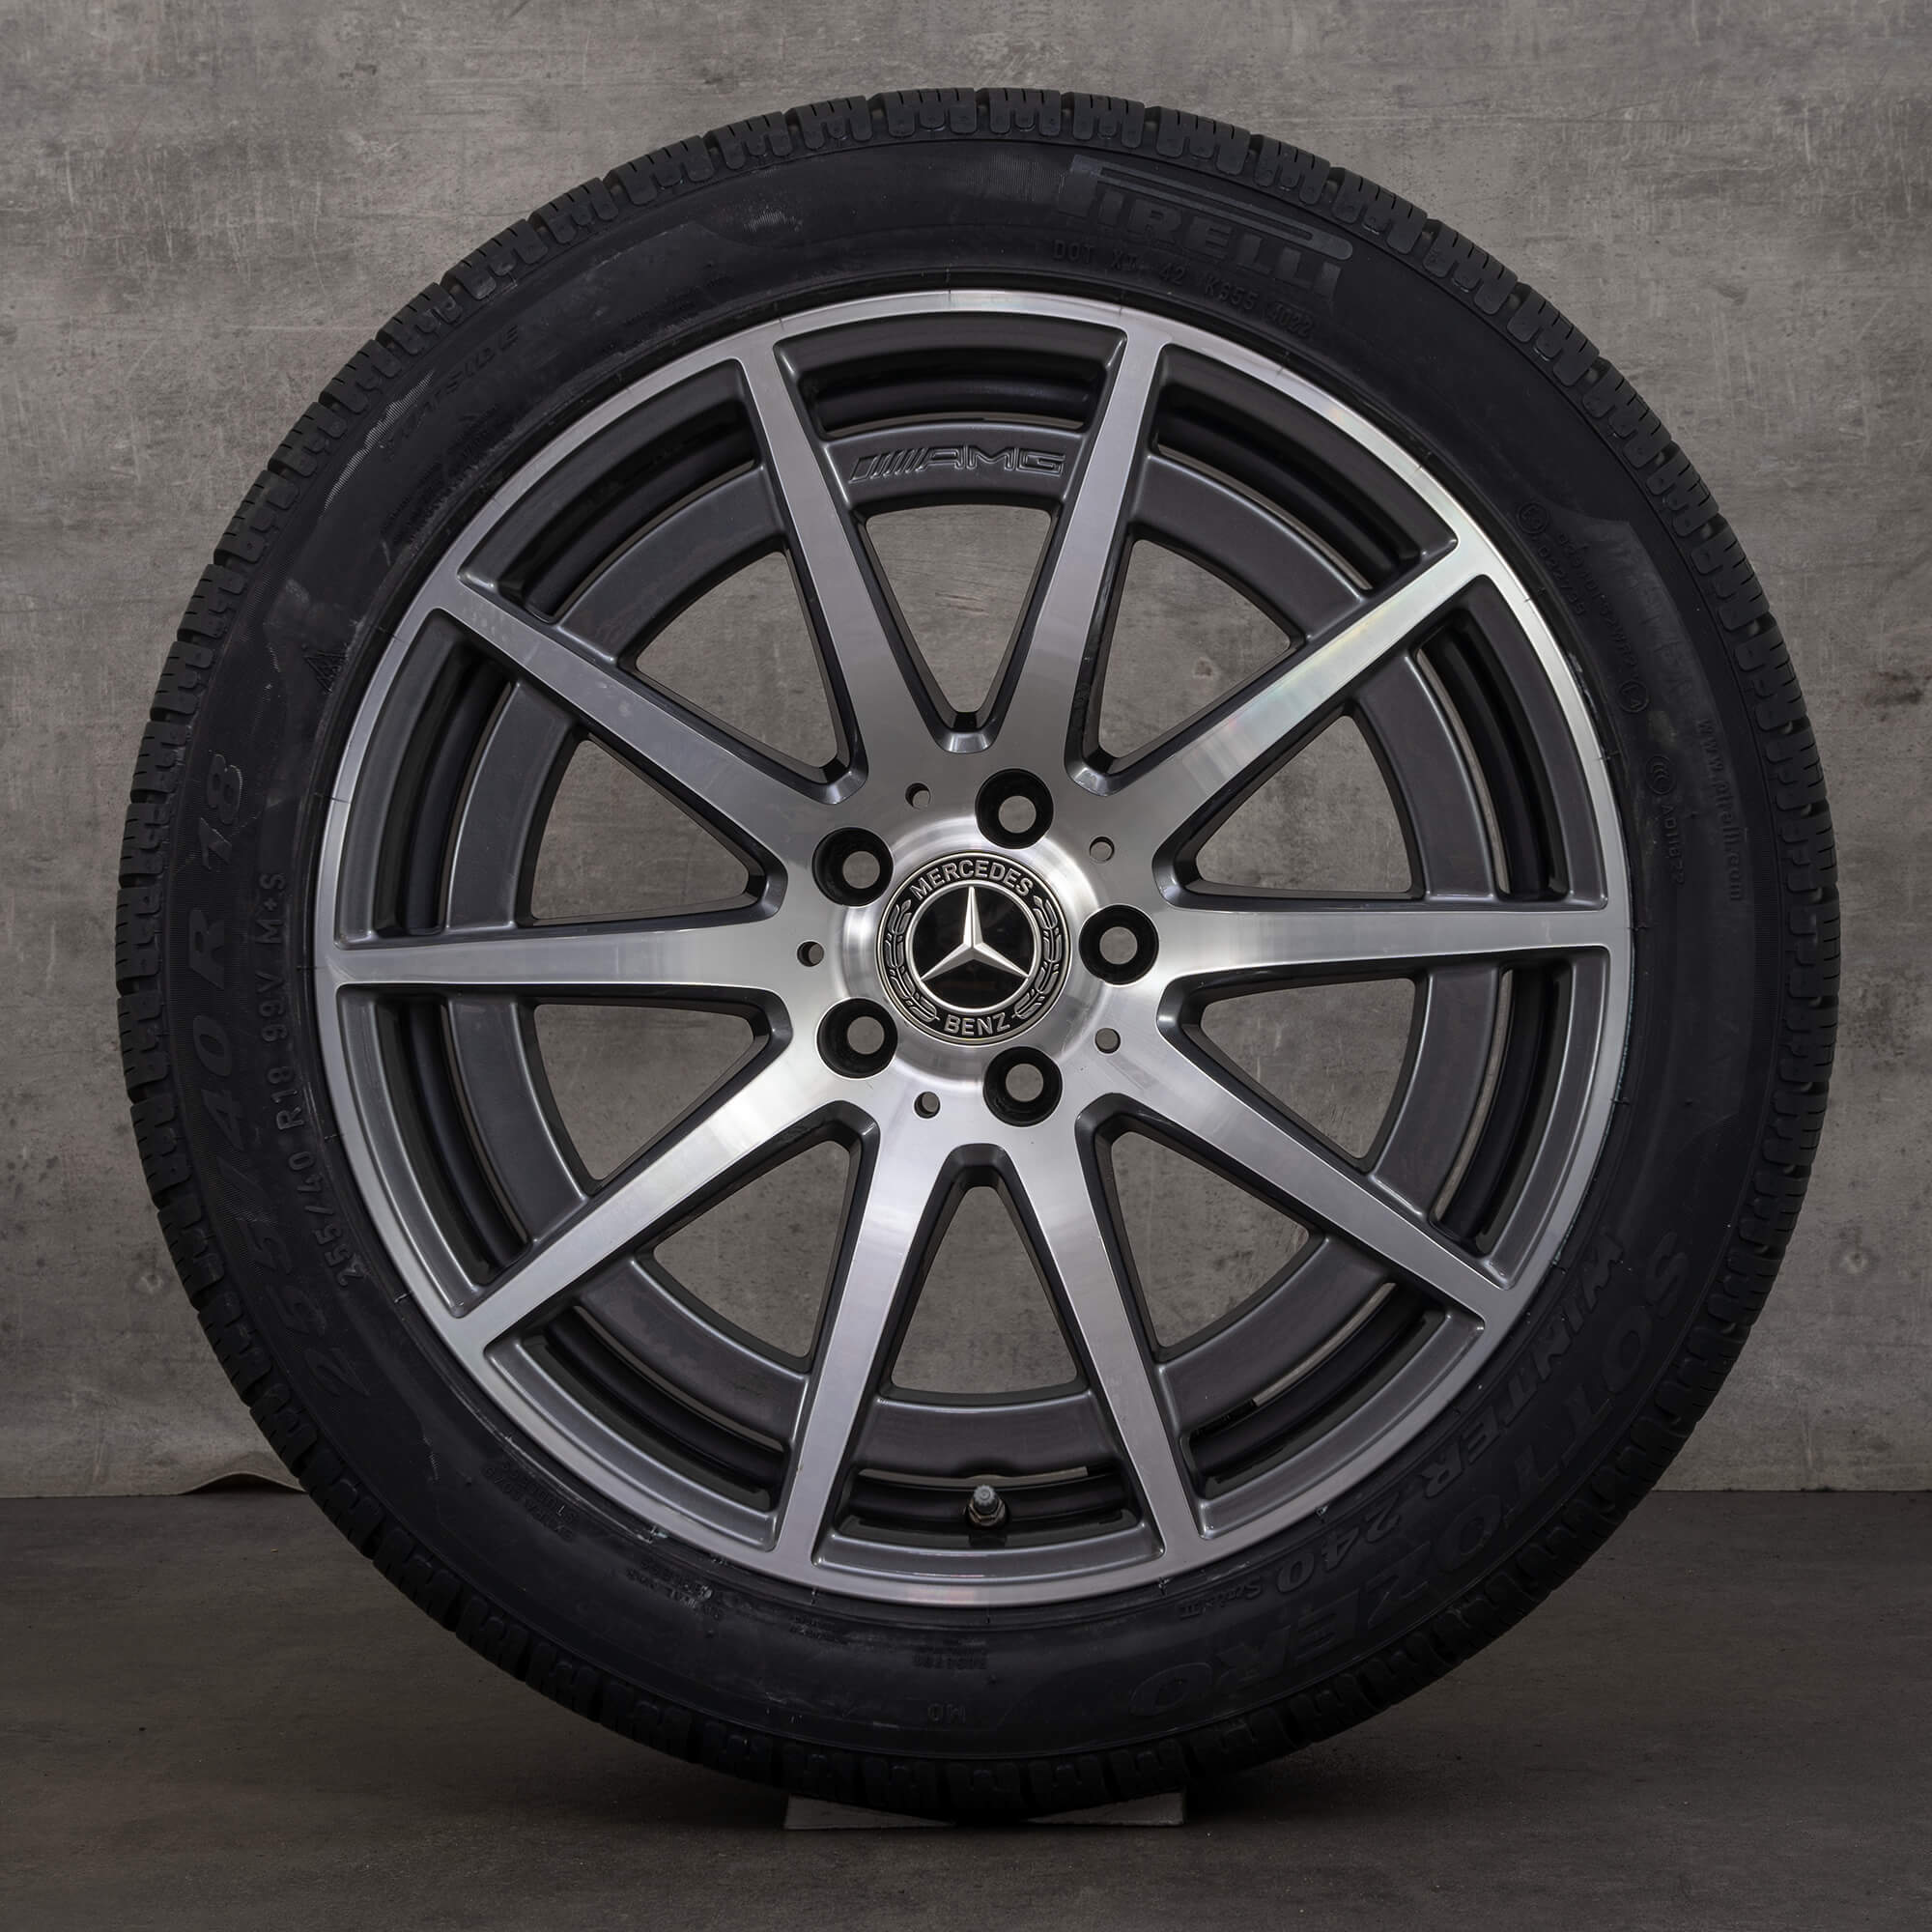 inch rims 18 C205 NEW A205 C-Class AMG Mercedes tires winter C63 wheels